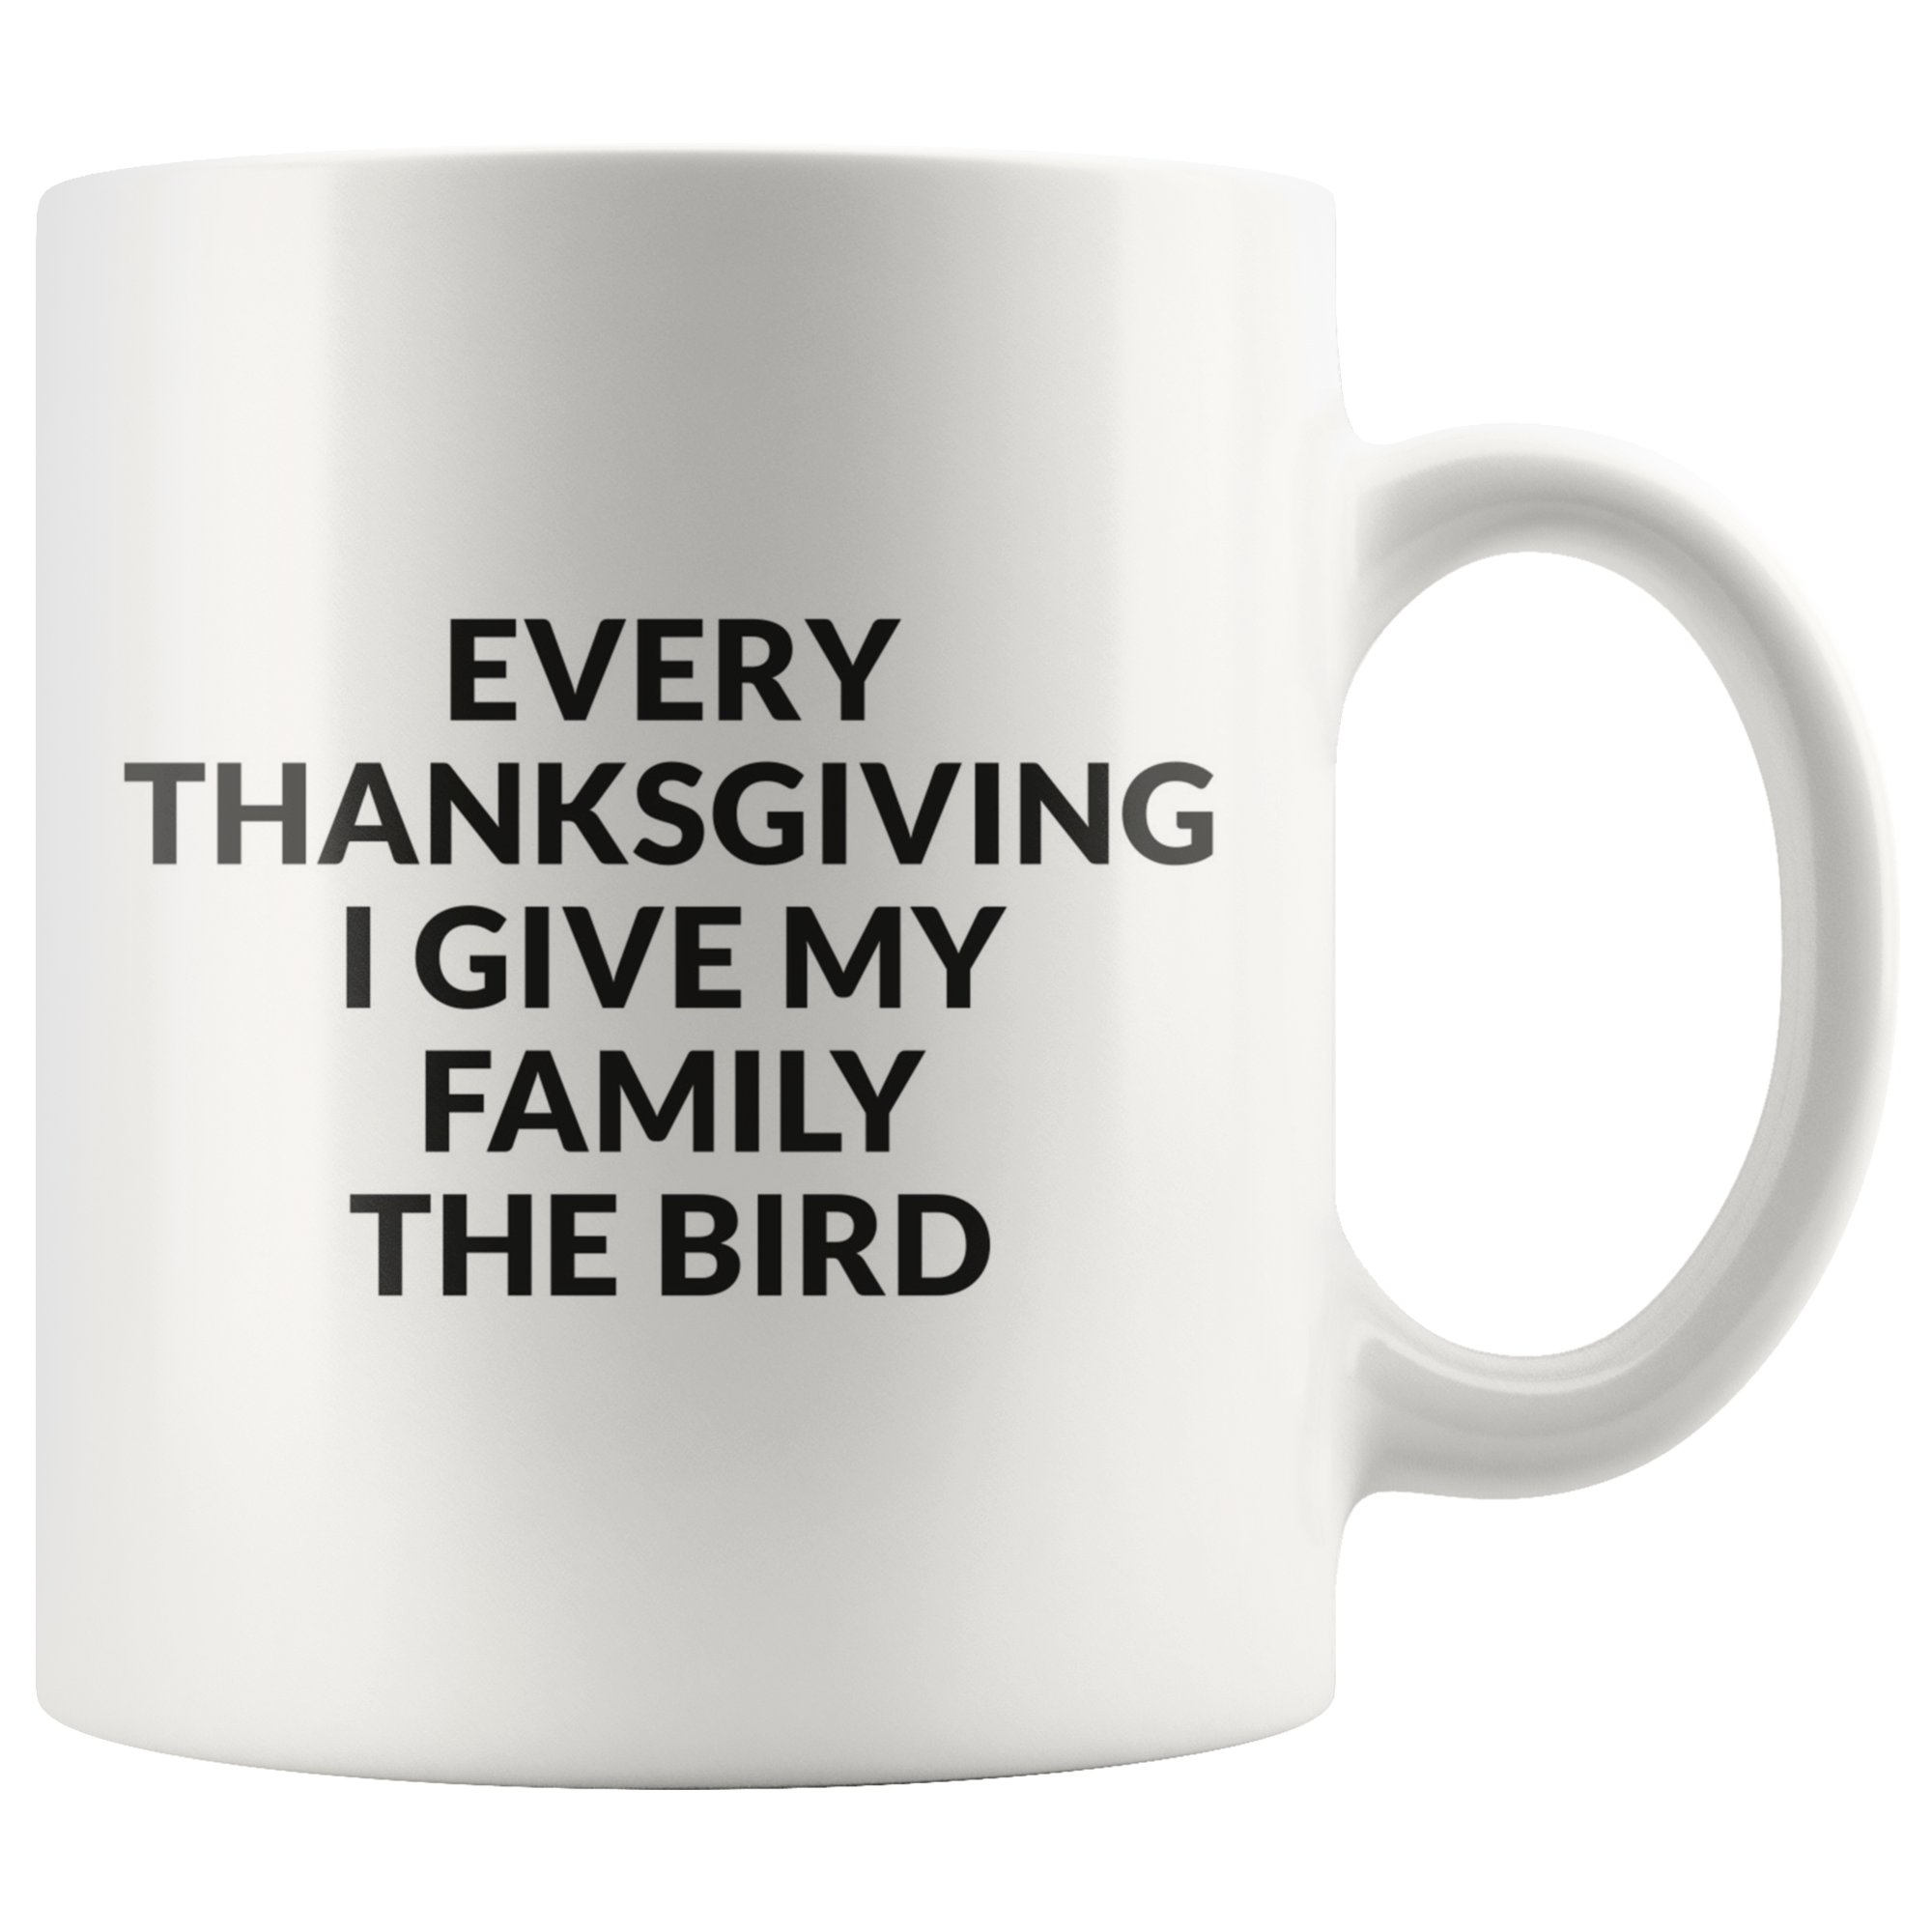 Give Your Family The Bird Coffee Mug